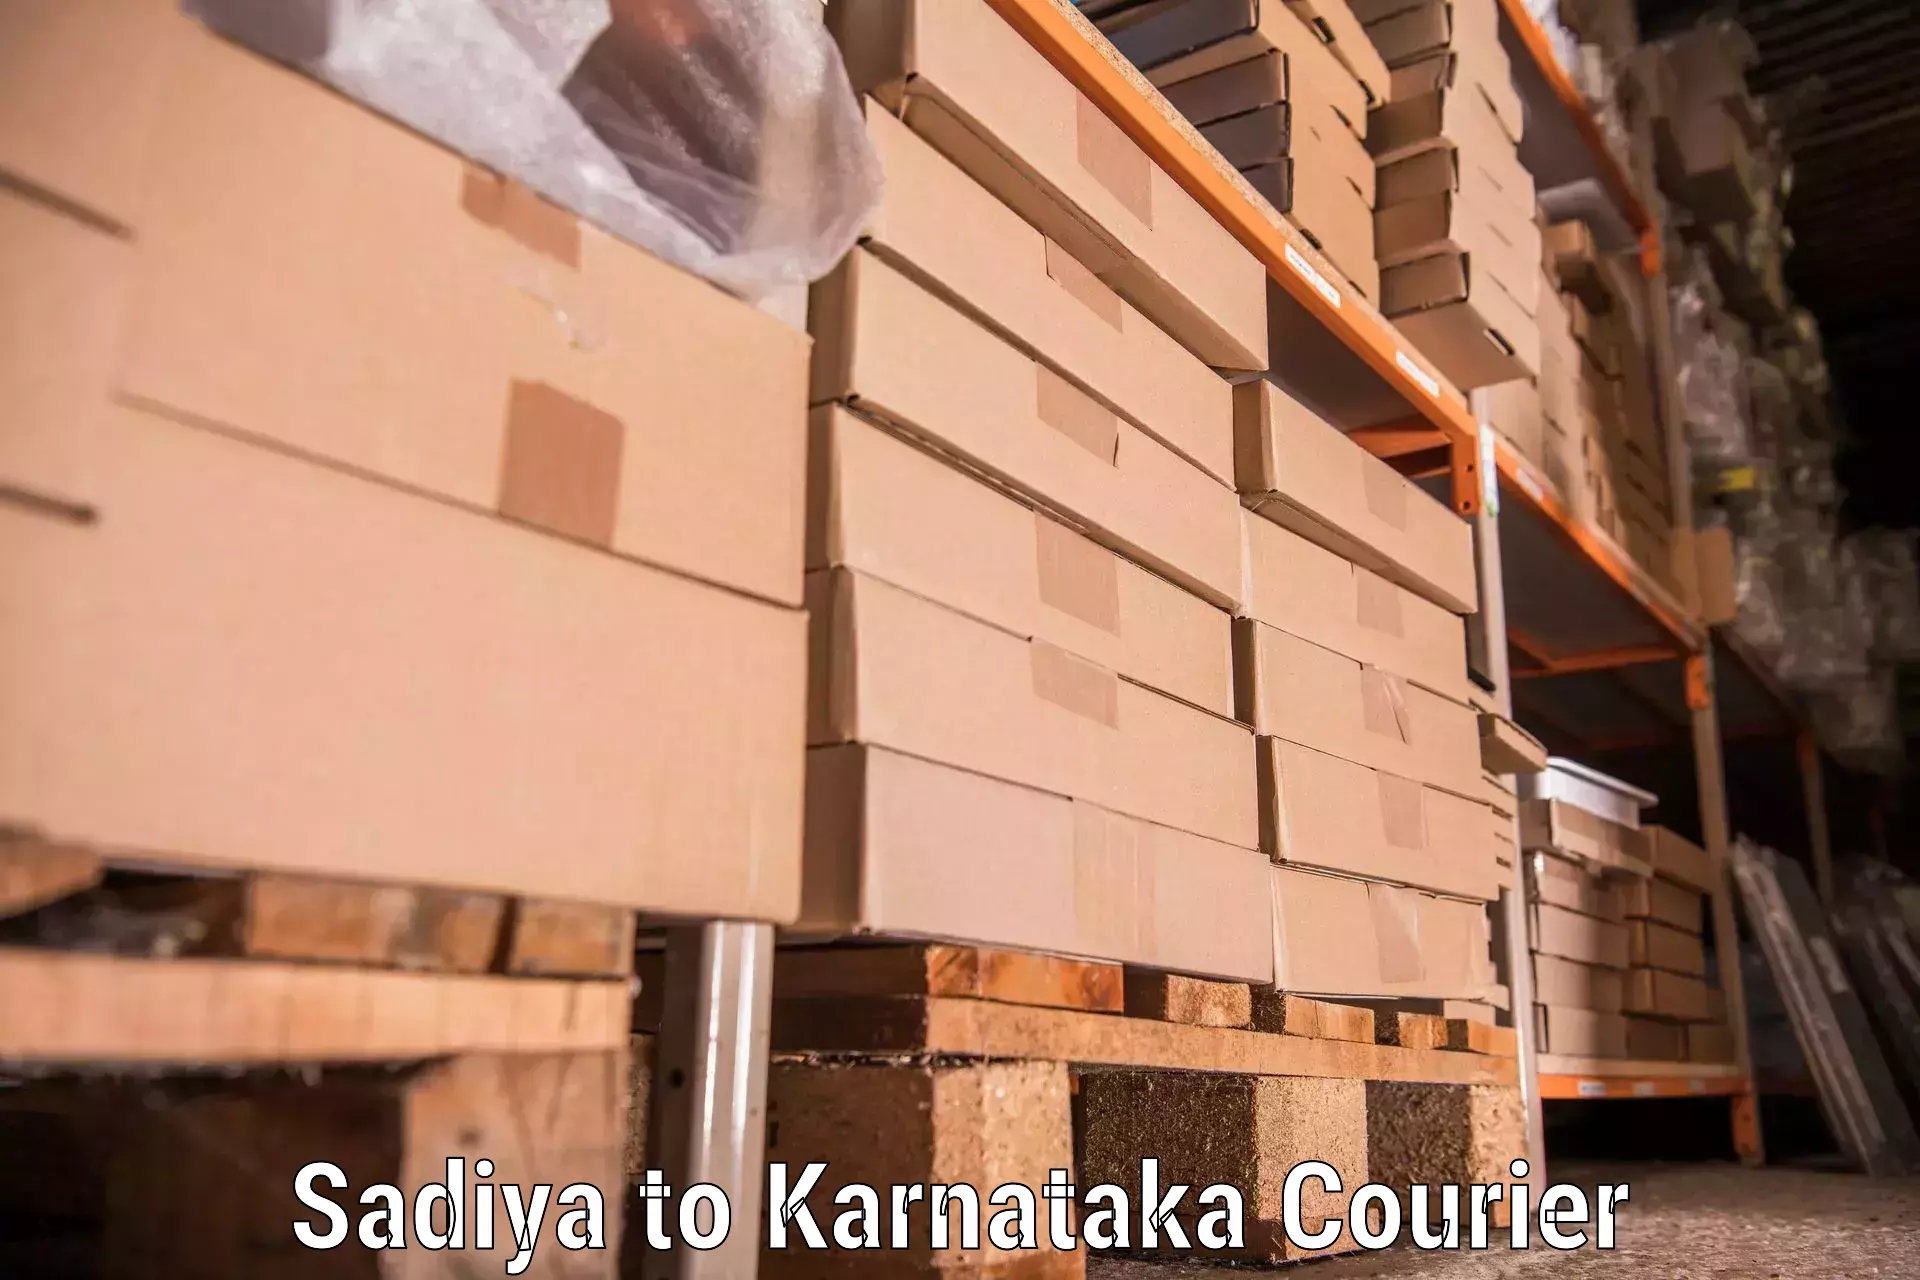 Furniture relocation experts Sadiya to Kotturu